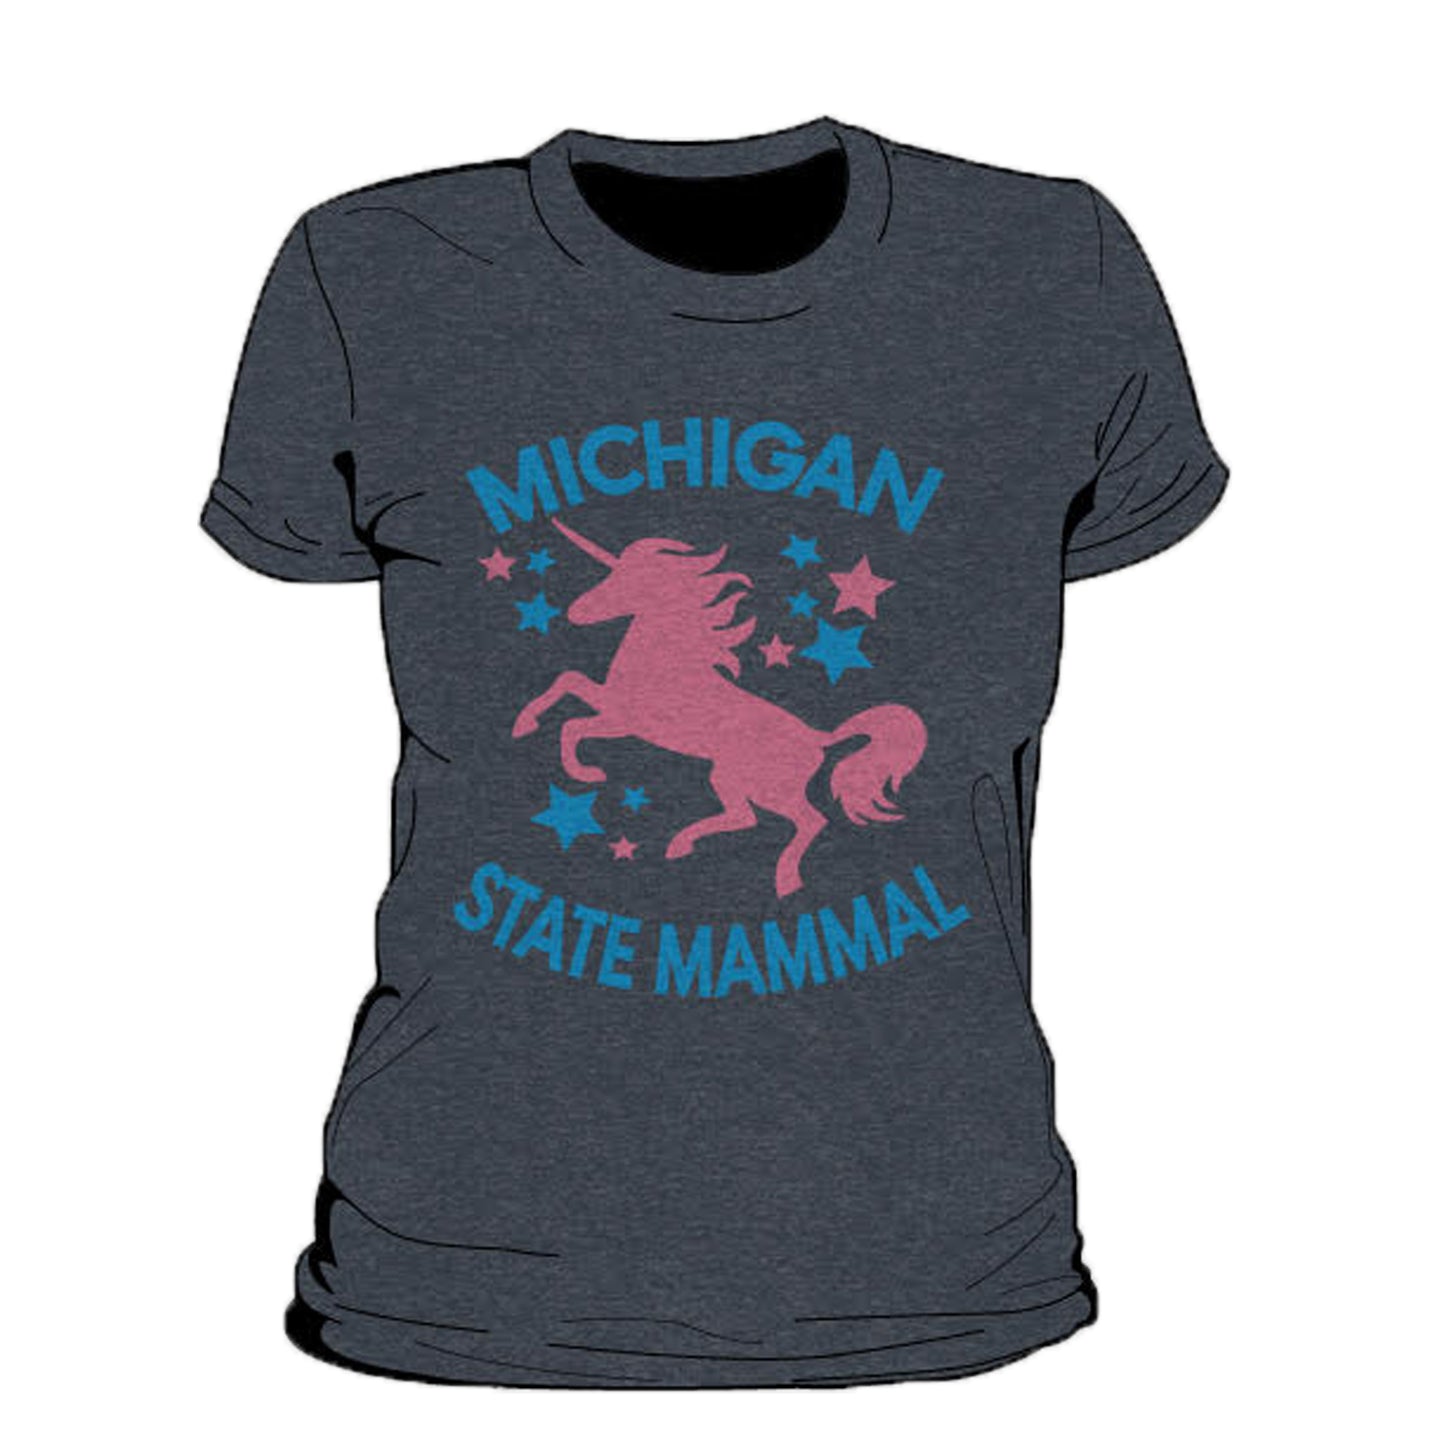 Michigan State Mammal Women's T-Shirt